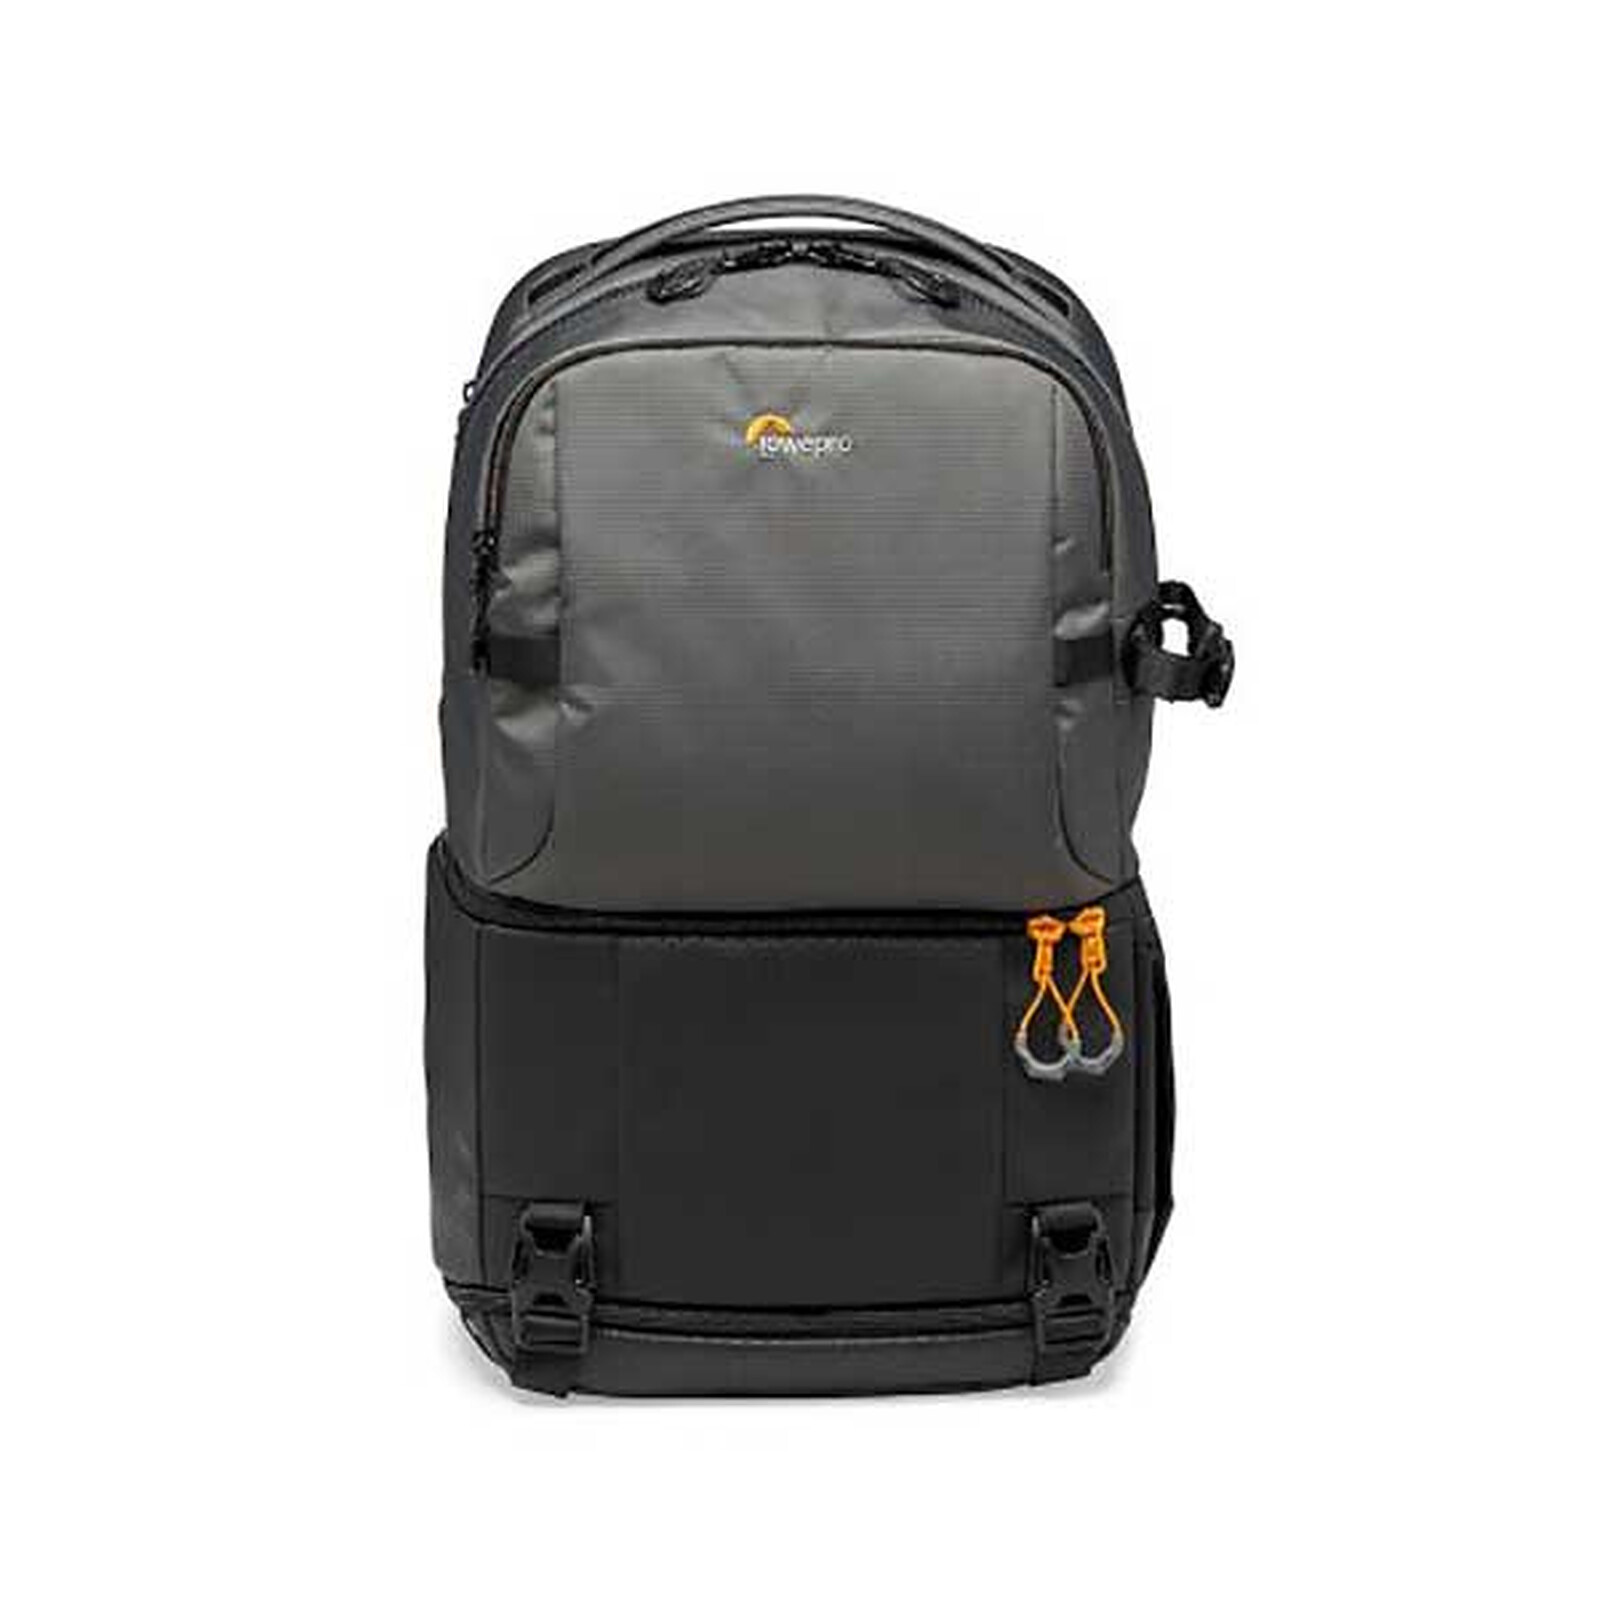 Lowepro Fastpack BP 250 AW III Grey - Camera bag & case - LDLC 3-year ...